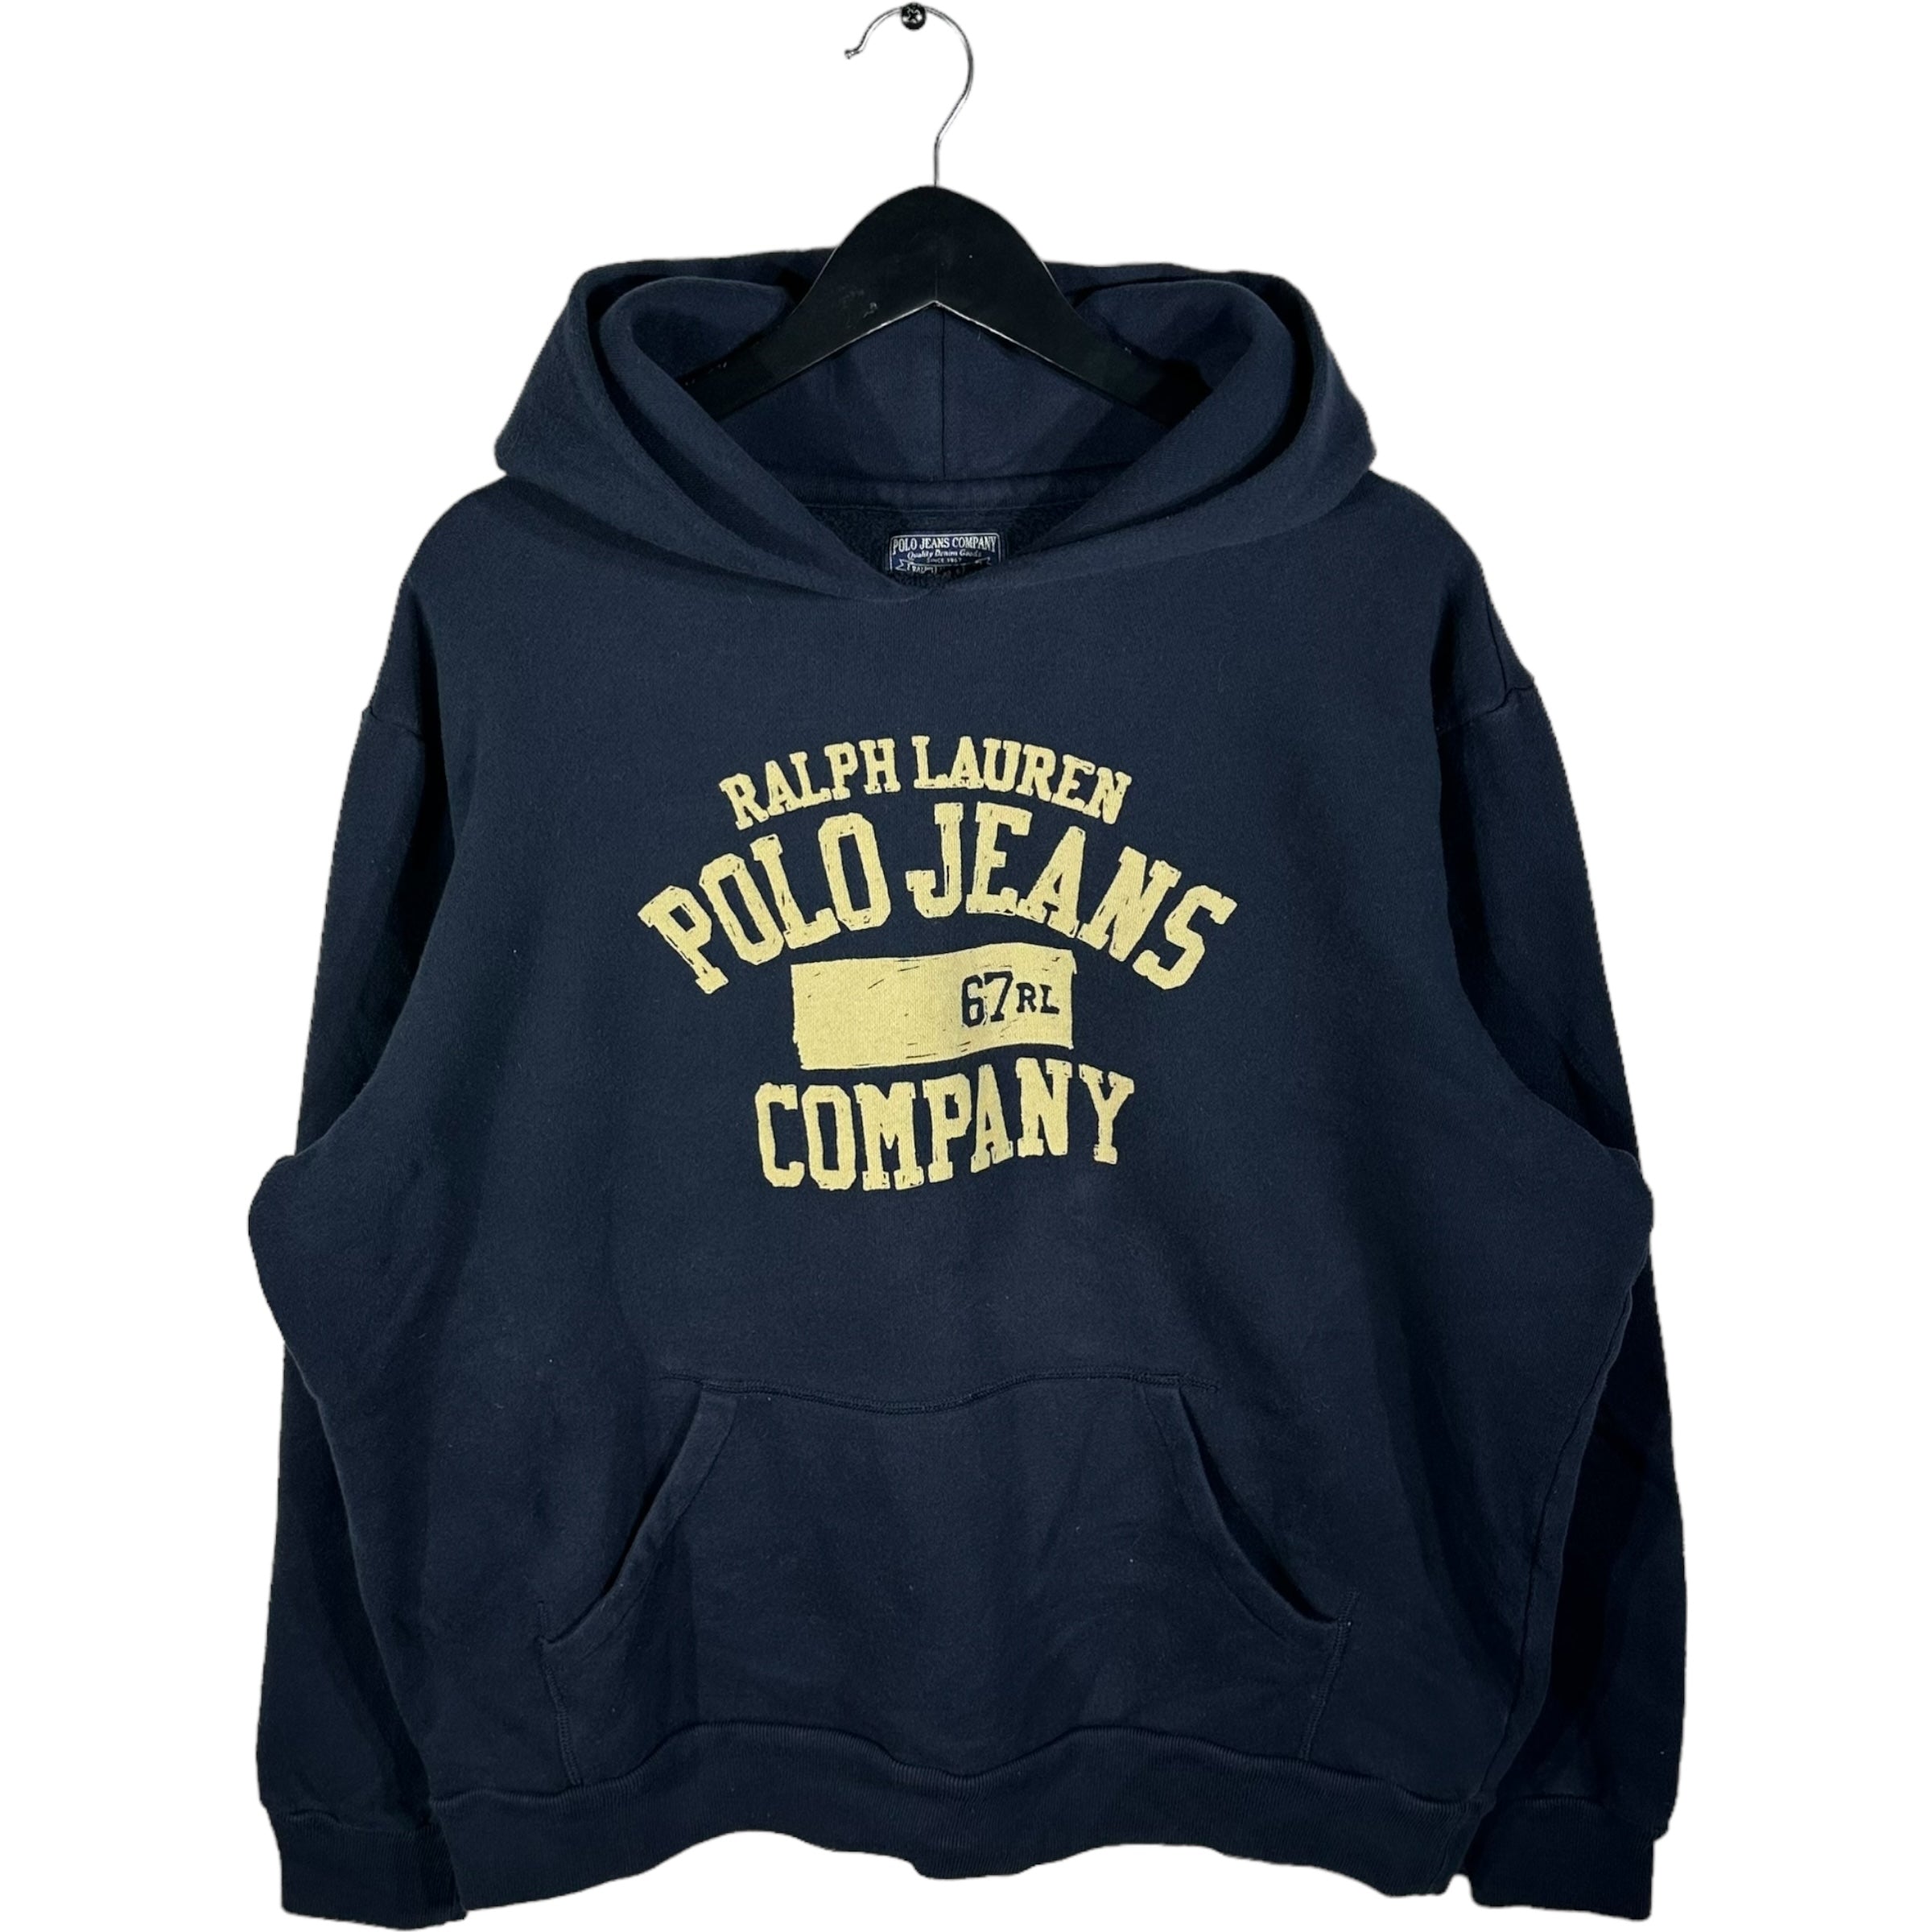 Vintage Ralph Lauren Jeans Company Hoodie